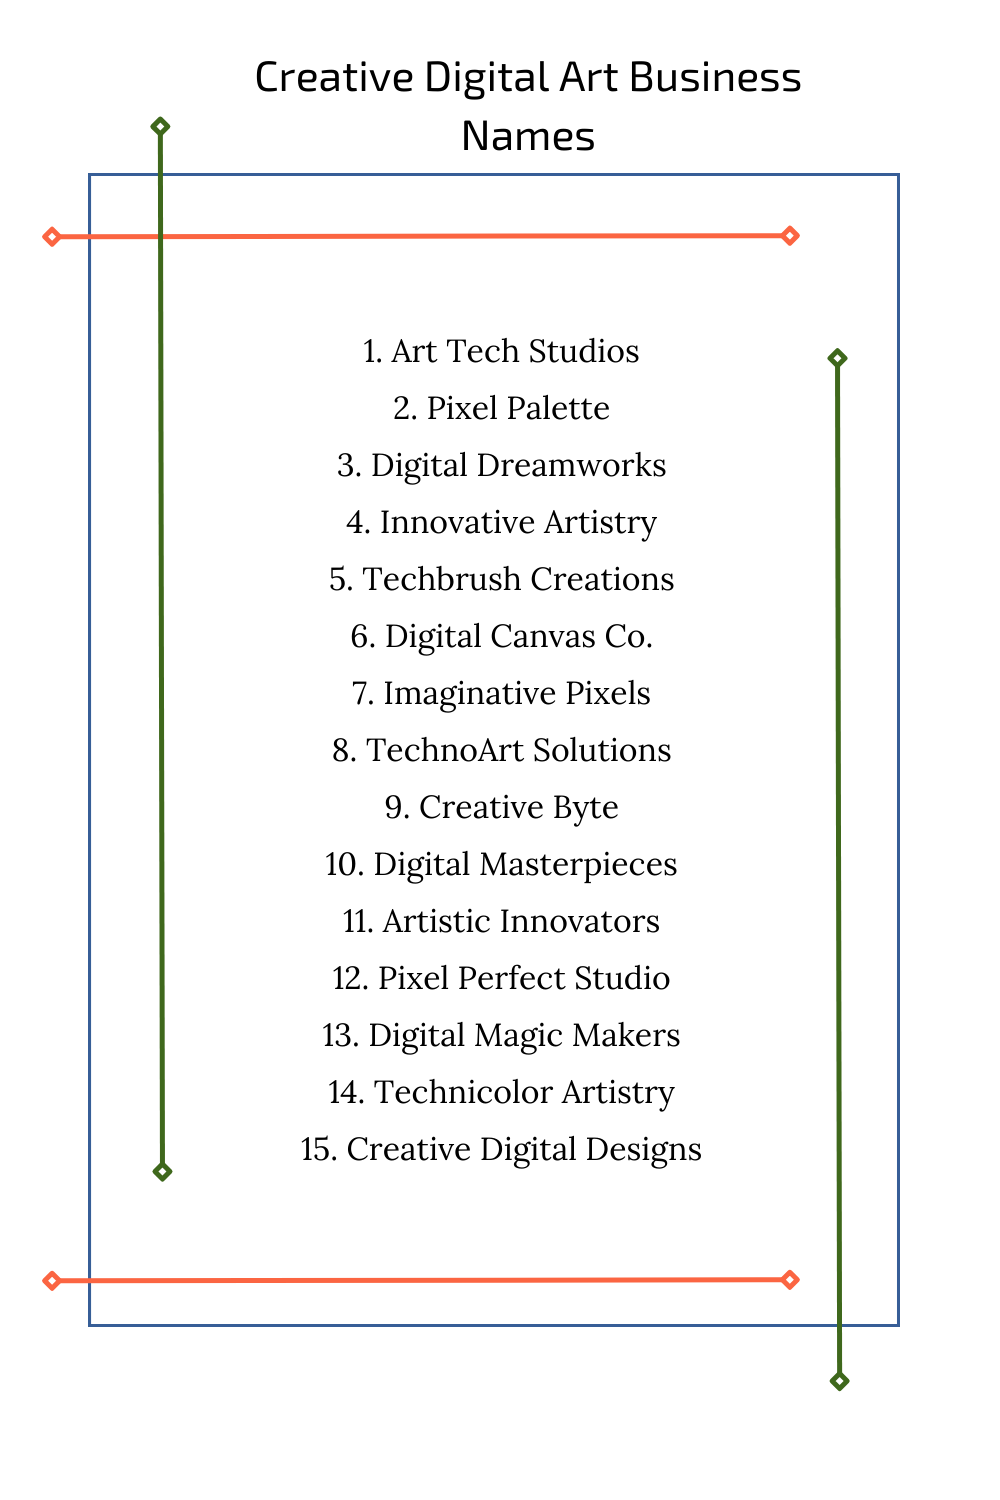 Creative Digital Art Business Names